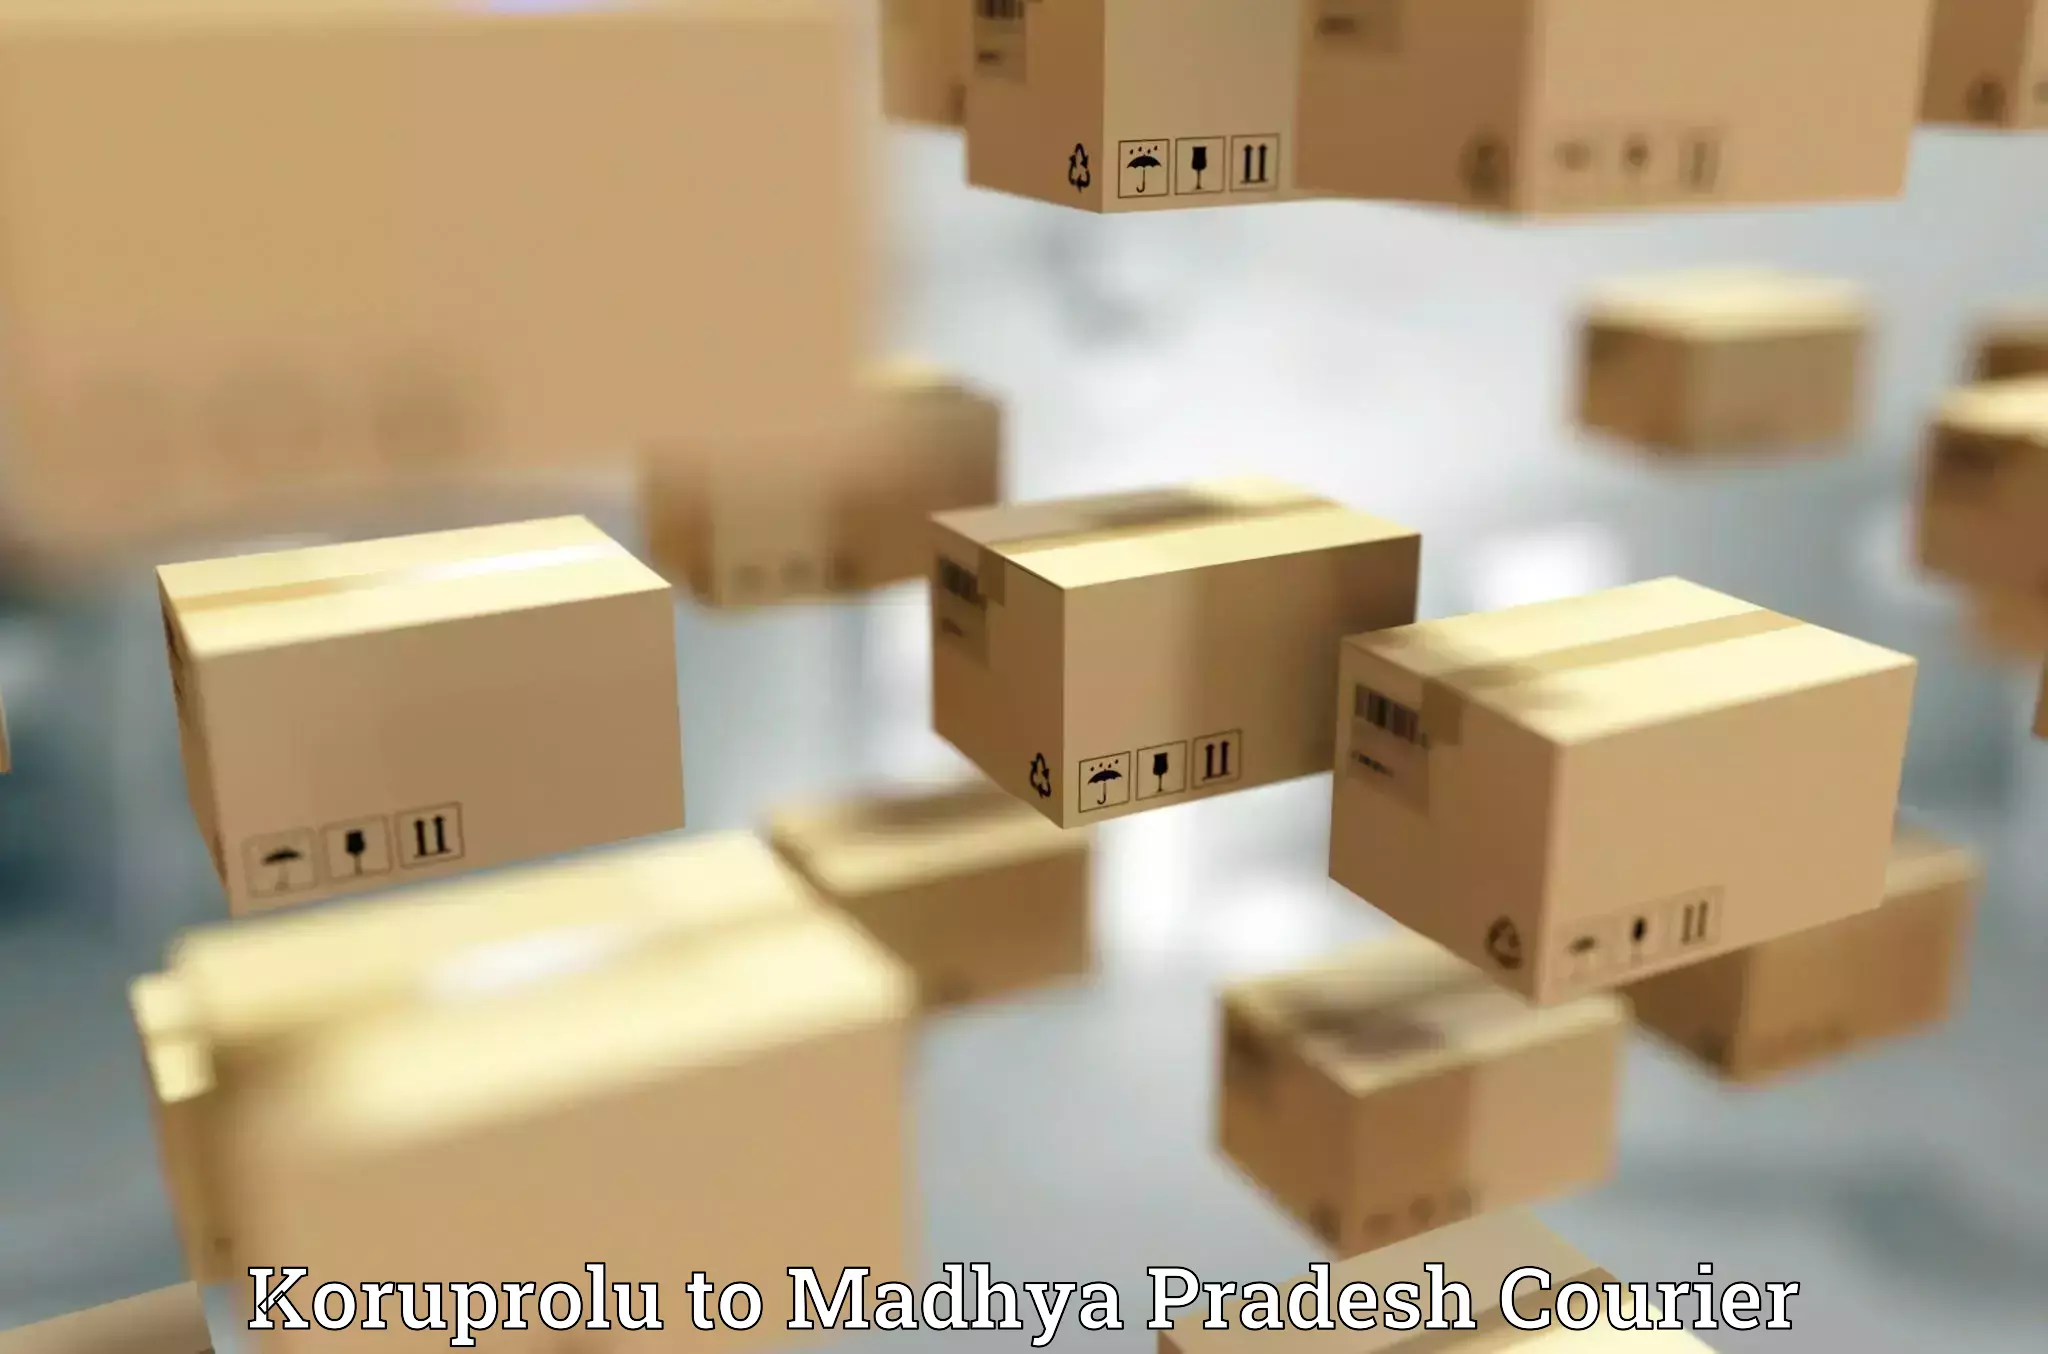 Express delivery capabilities Koruprolu to Madhya Pradesh